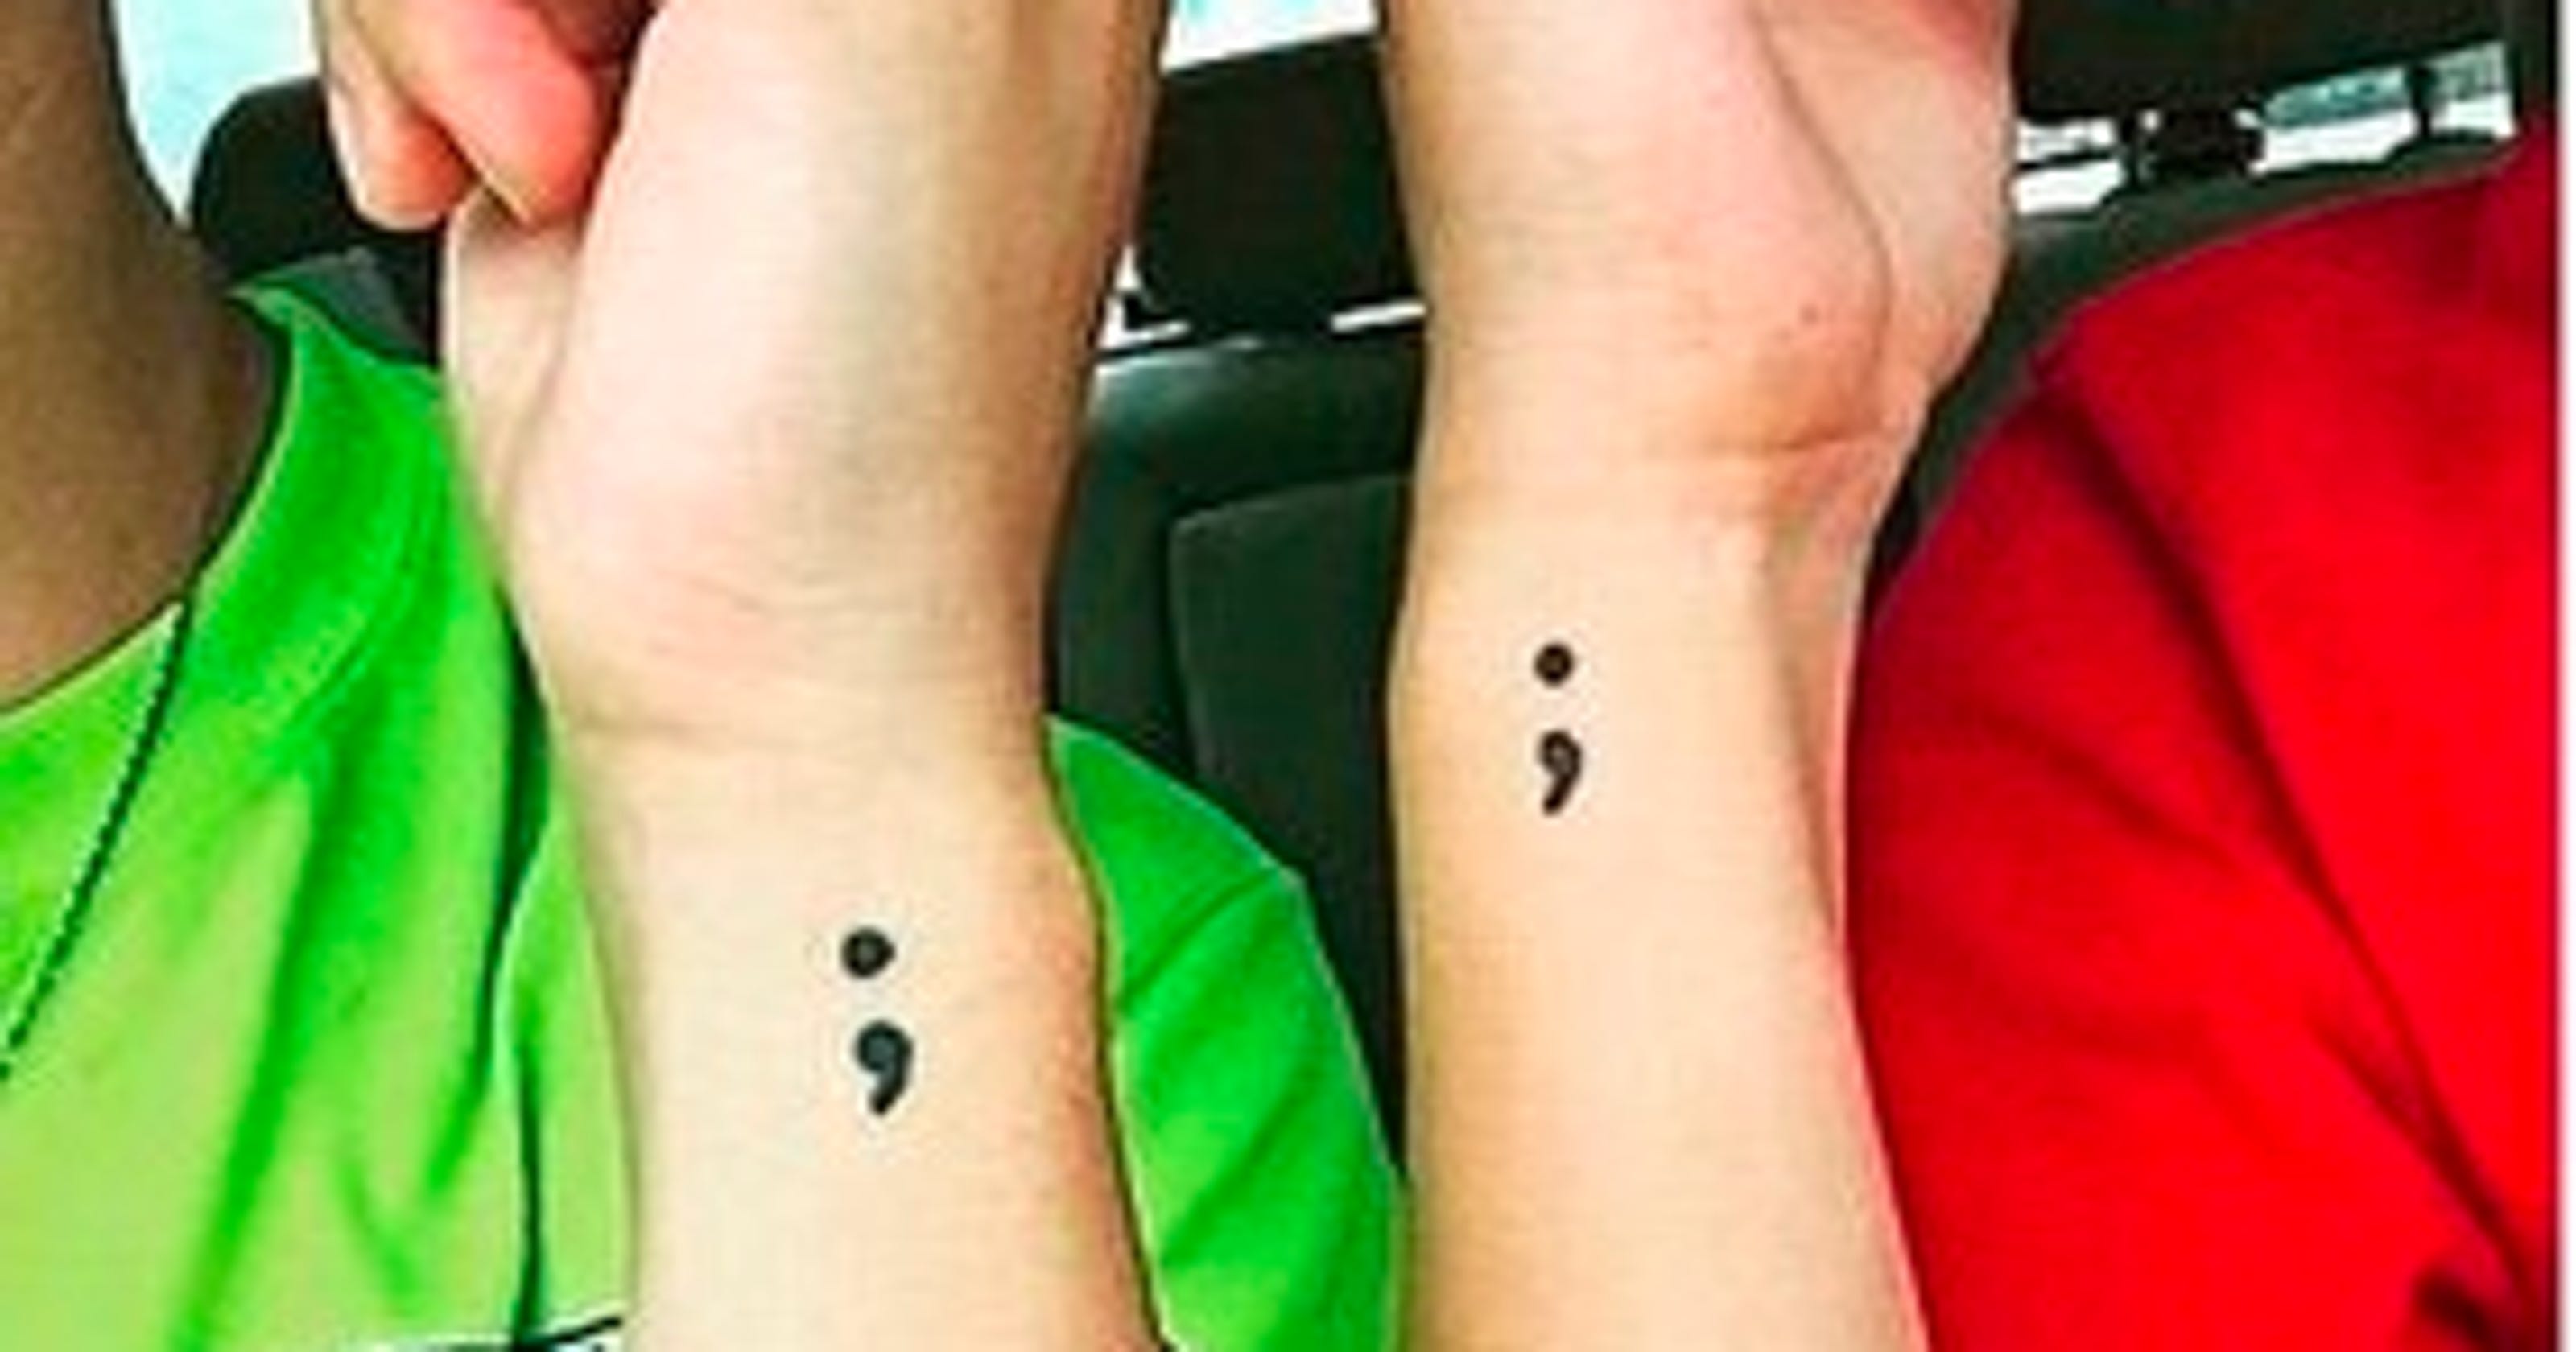 Semicolon tattoos raise awareness about mental illness